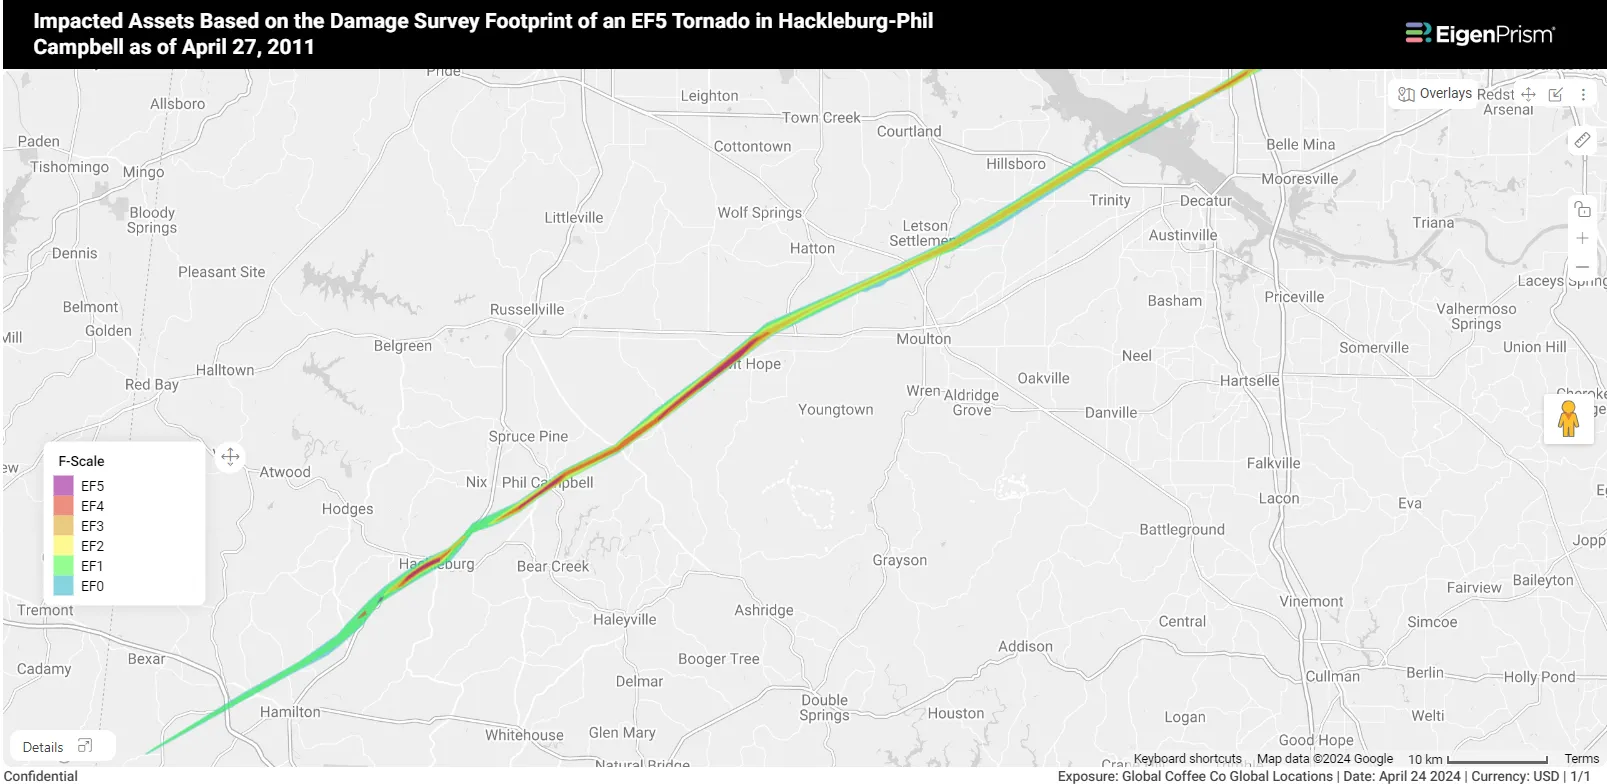 Damage Survey footprint of EF5 Tornado in Hackelburg